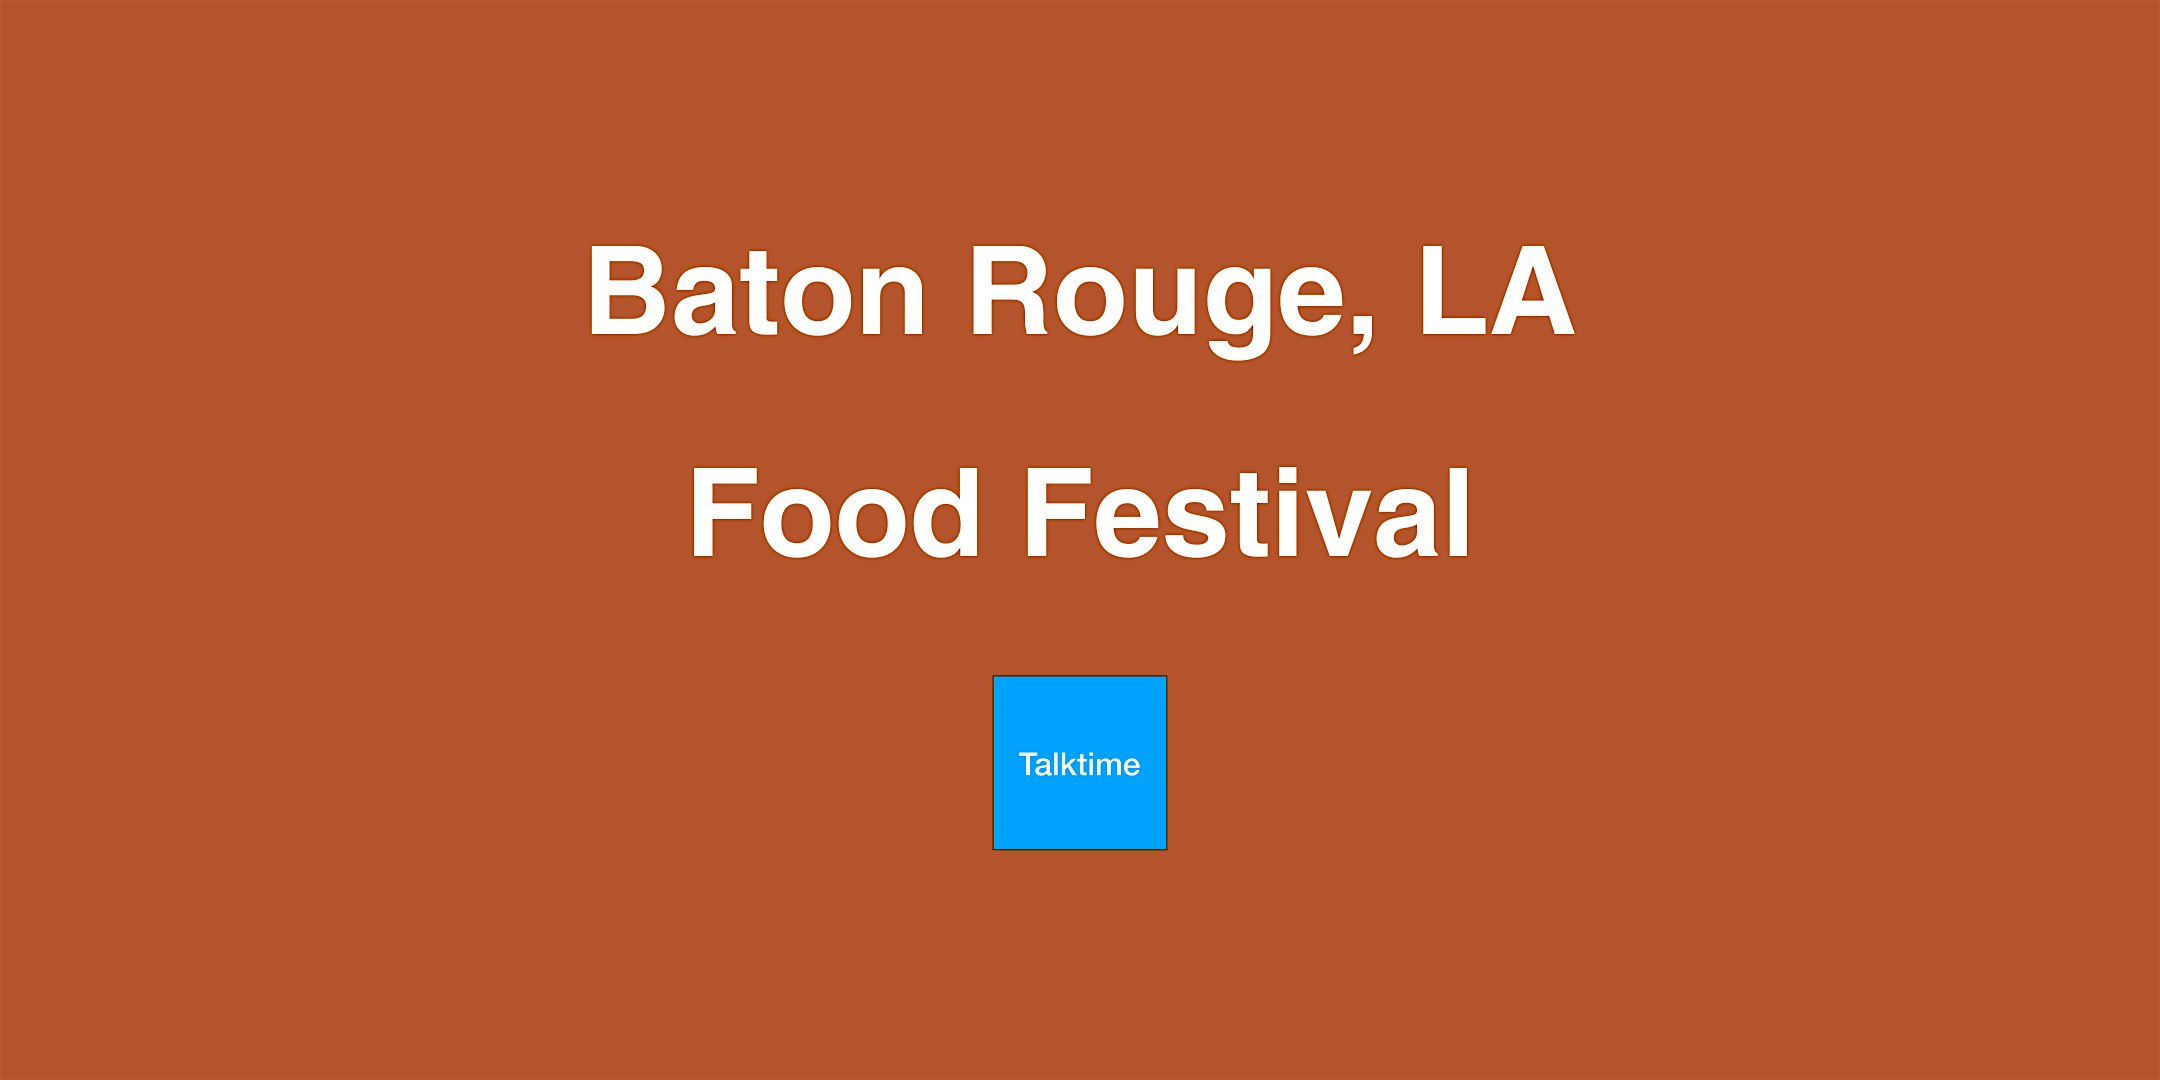 Food Festival - Baton Rouge